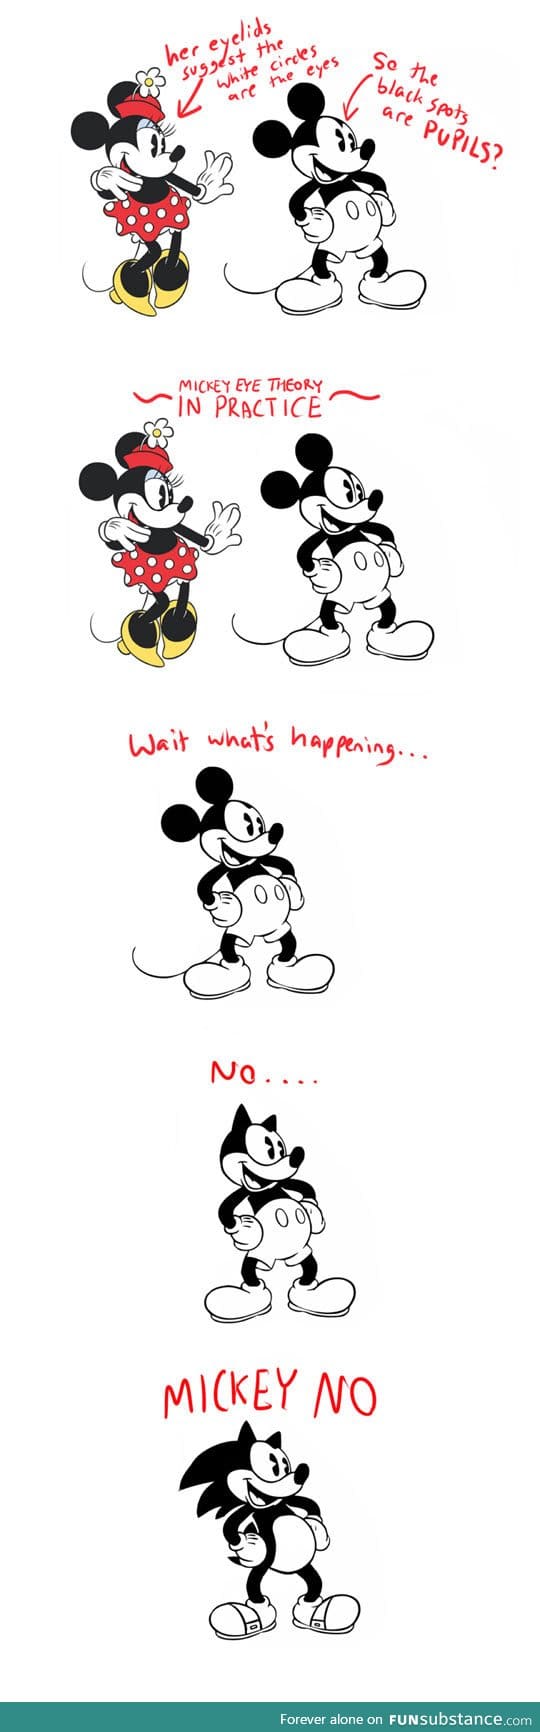 Mickey's eye theory